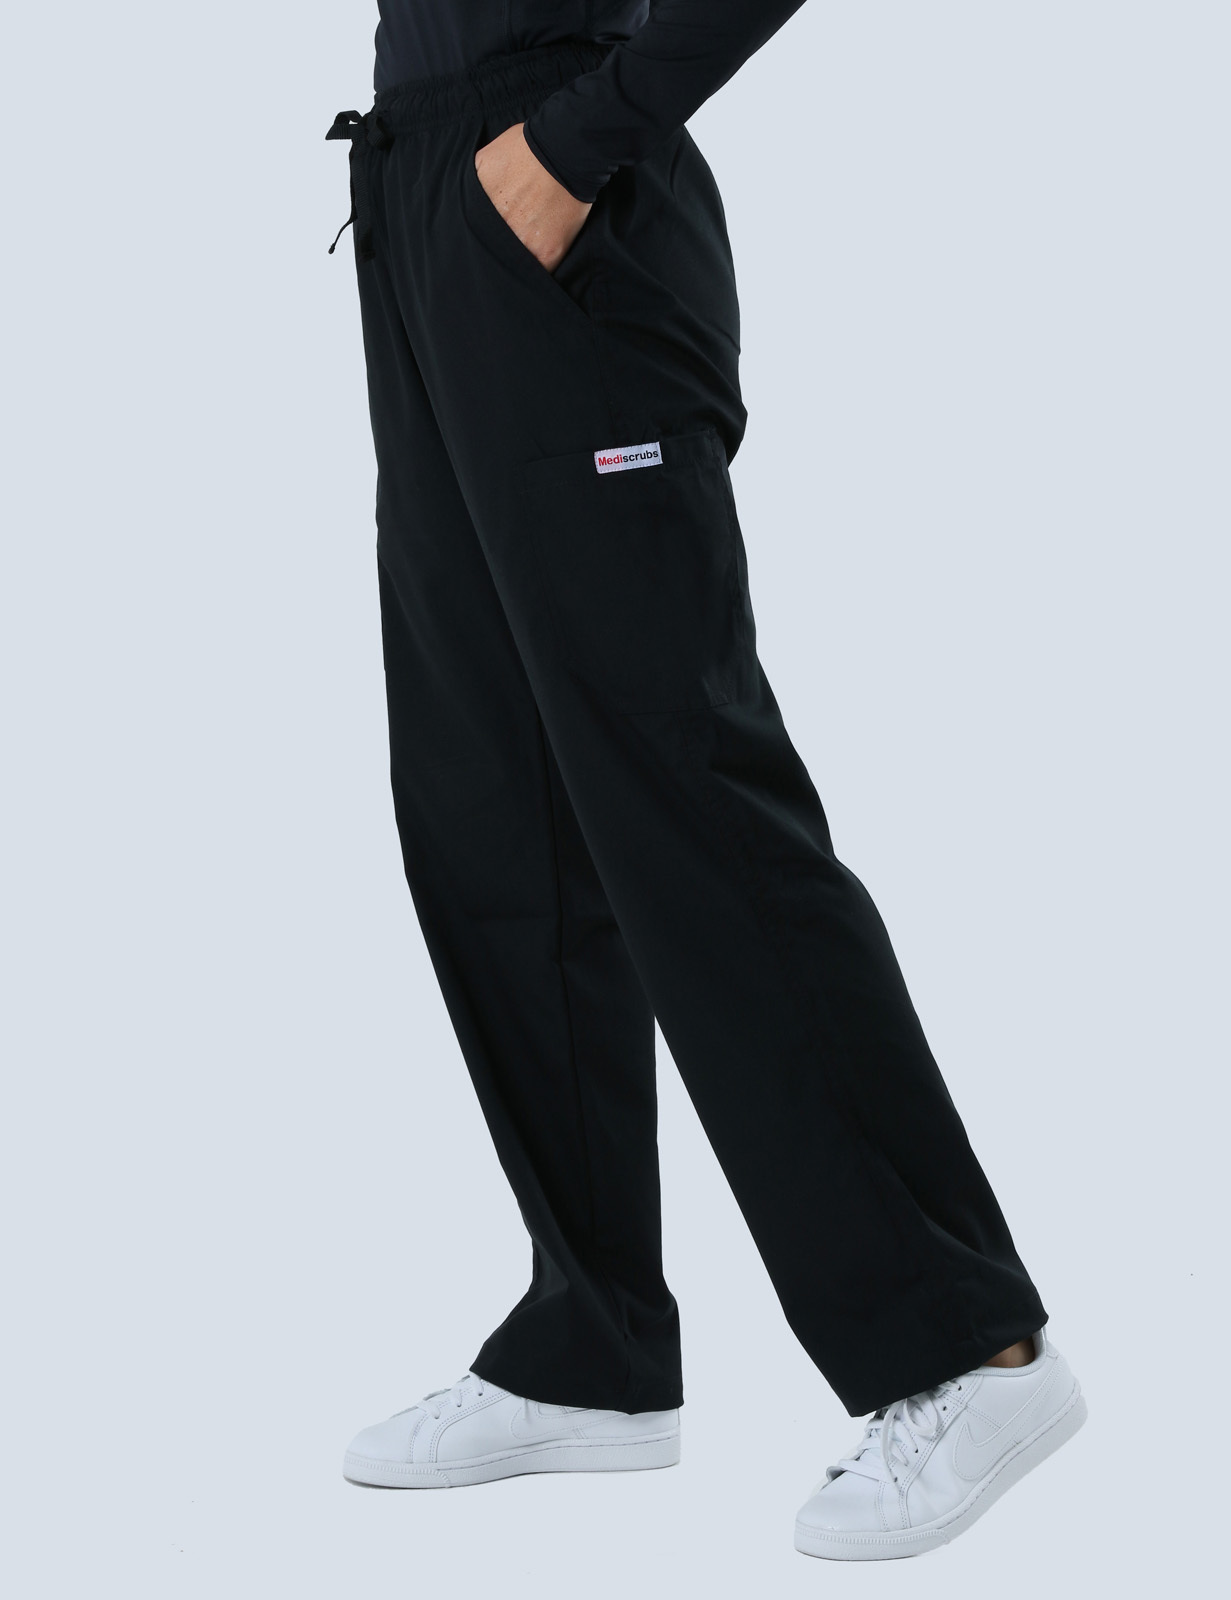 Women's Cargo Performance Pants - Black - X Large